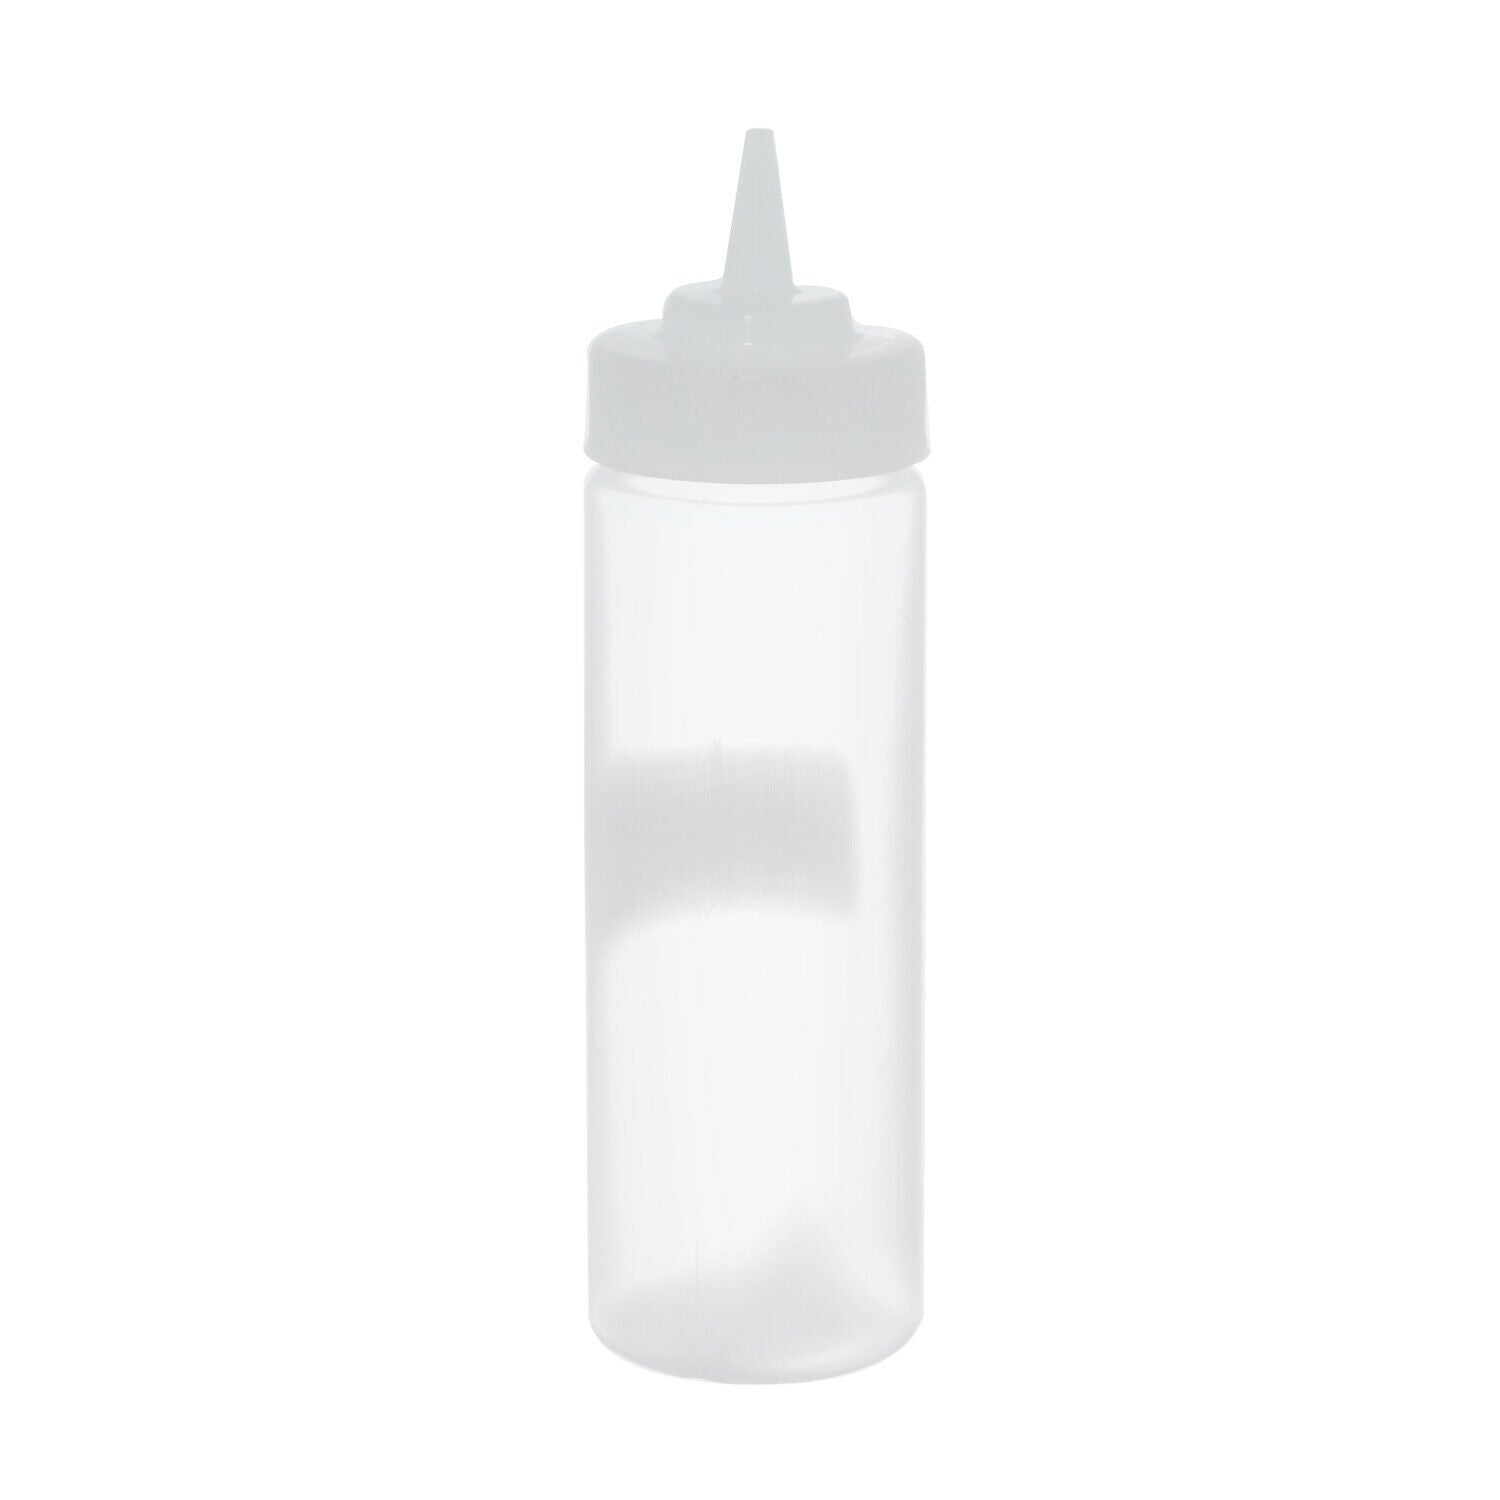 Dosatore biberon per condimenti trasparente 21 cm 720ml 04 19 91